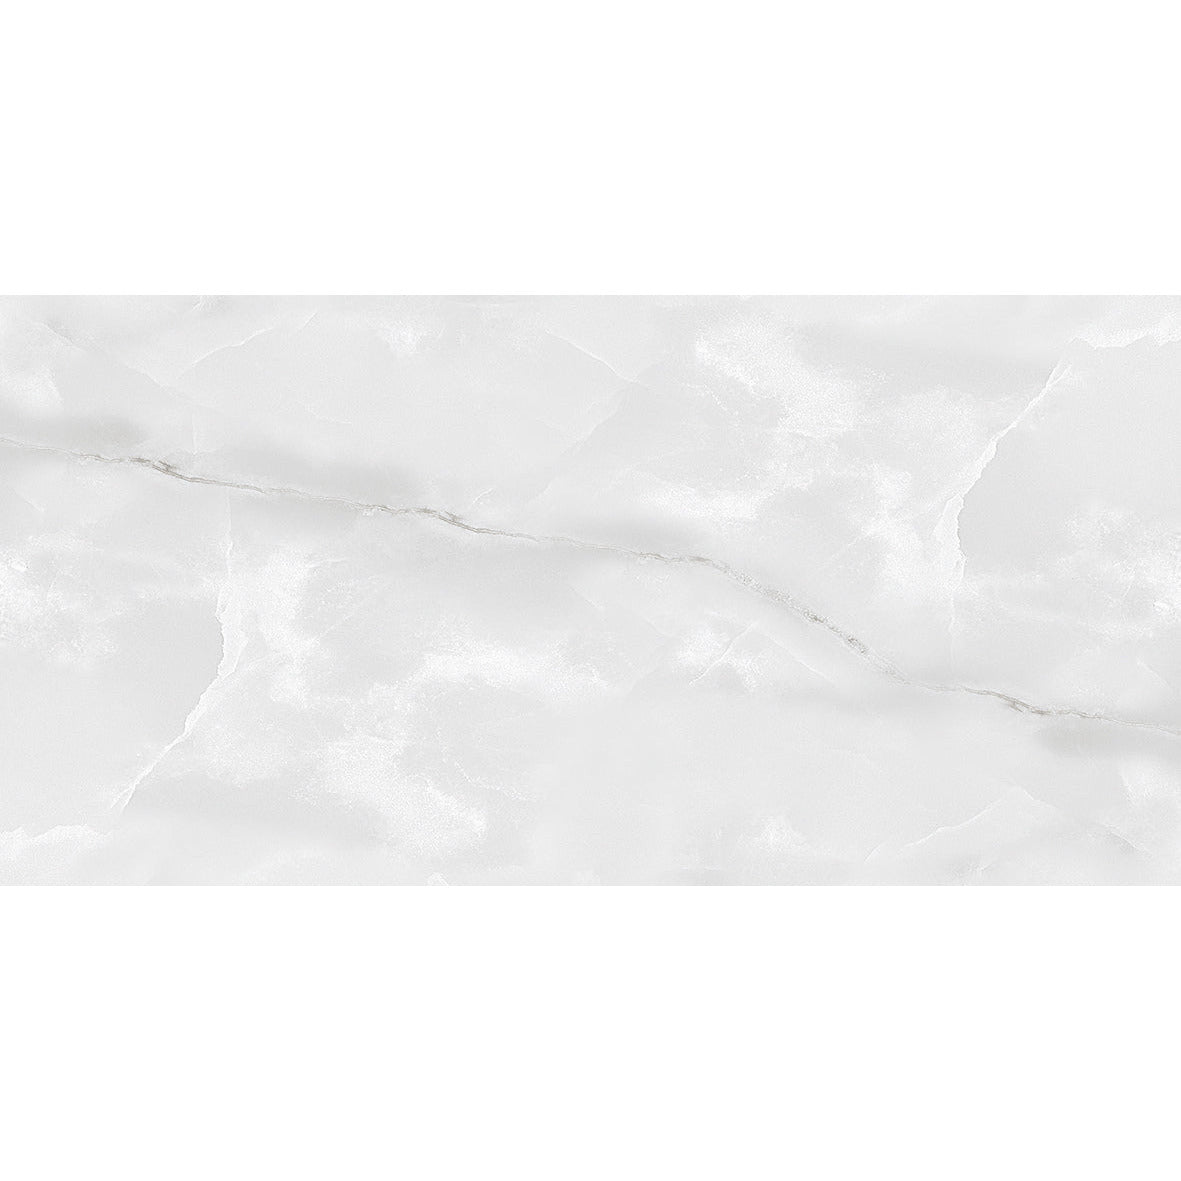 Maxi Grey Gloss Porcelain 30X60cm Kitchen Bathroom Wall Floor Tile